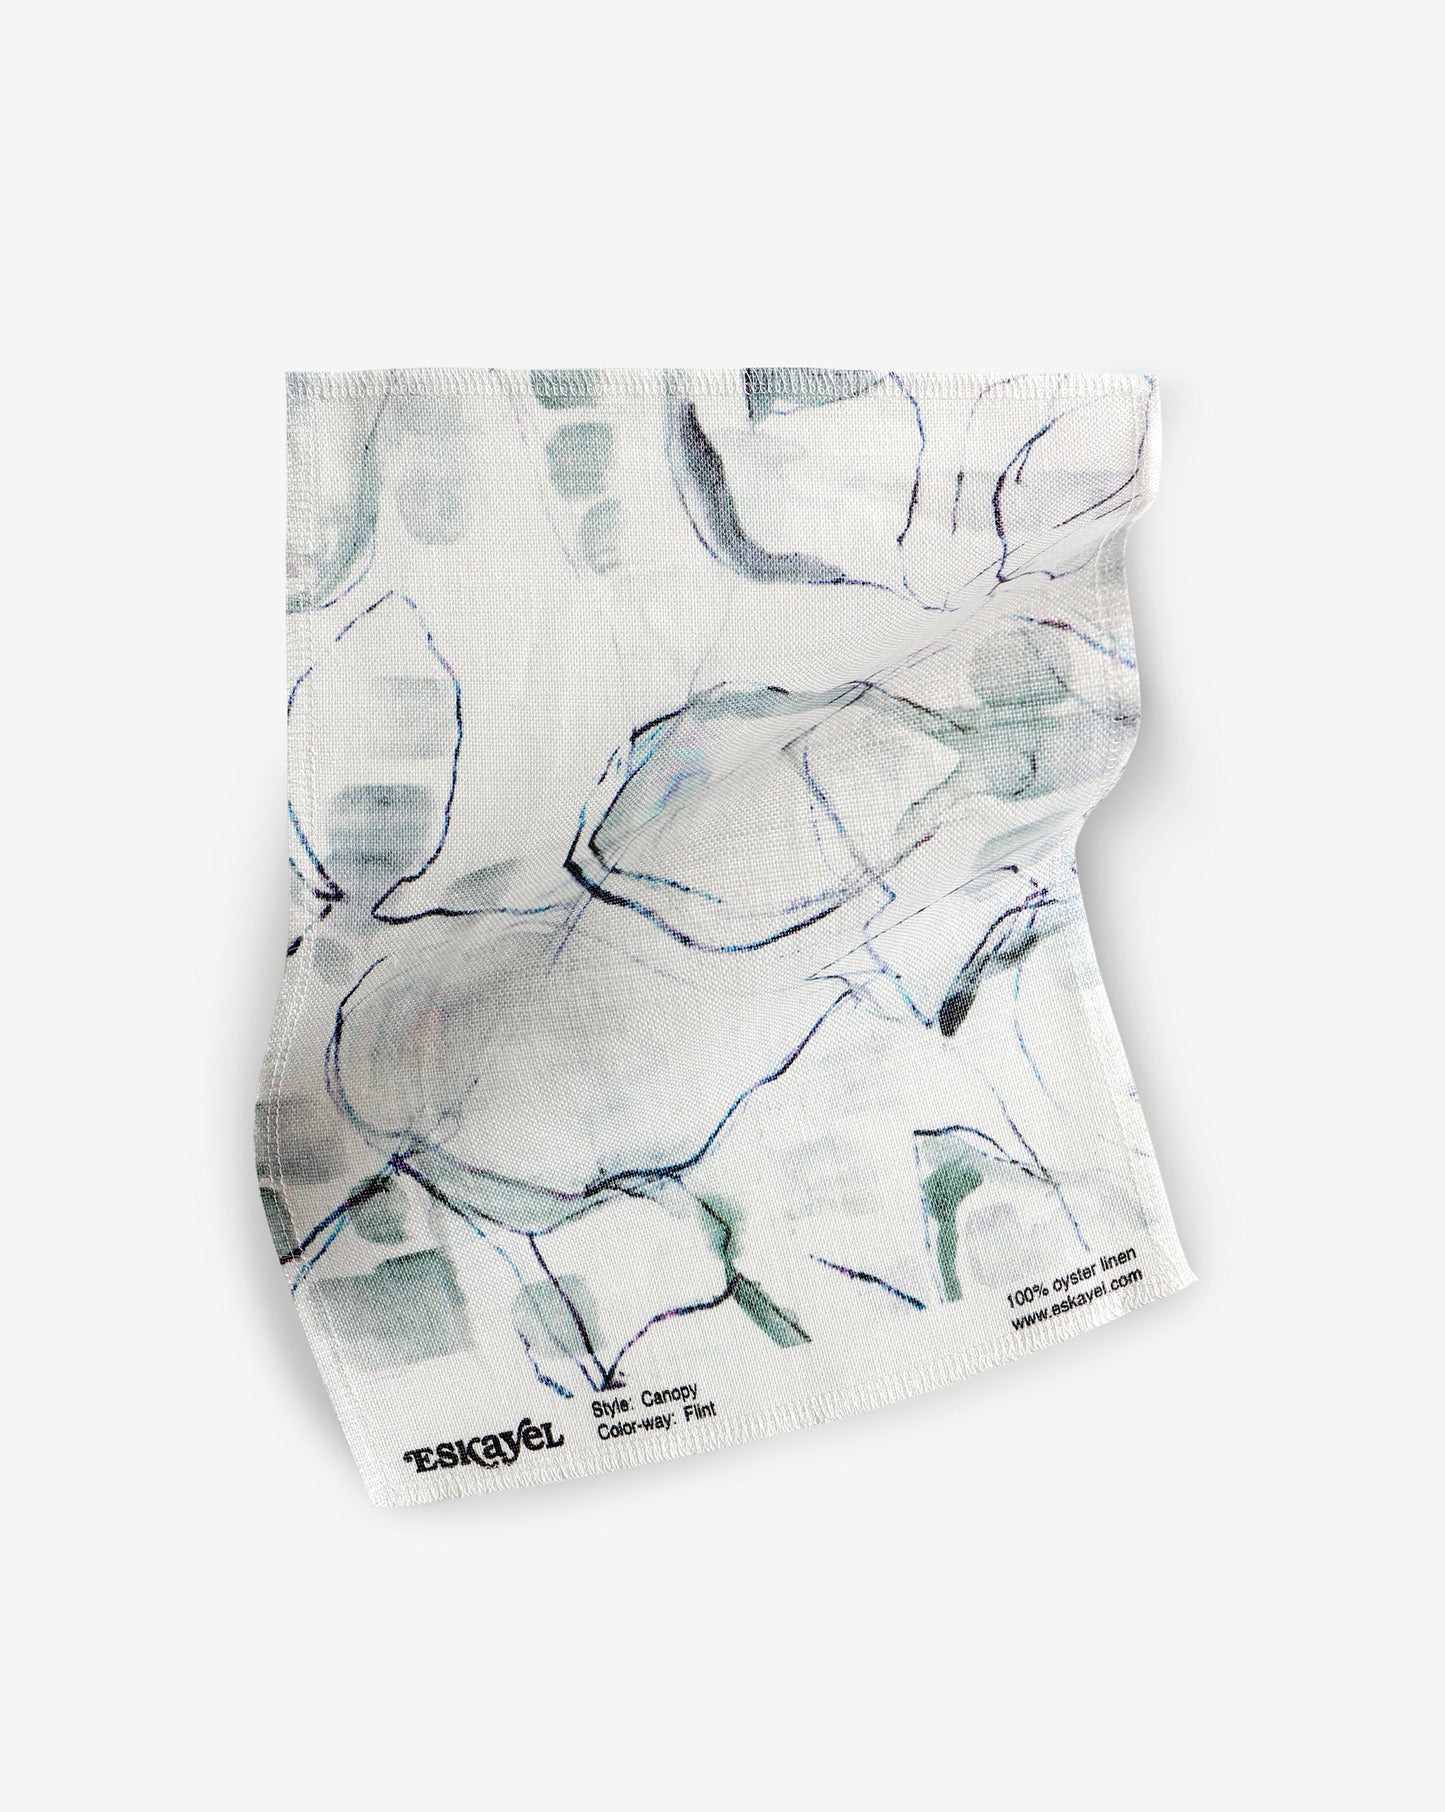 Canopy Fabric||Flint